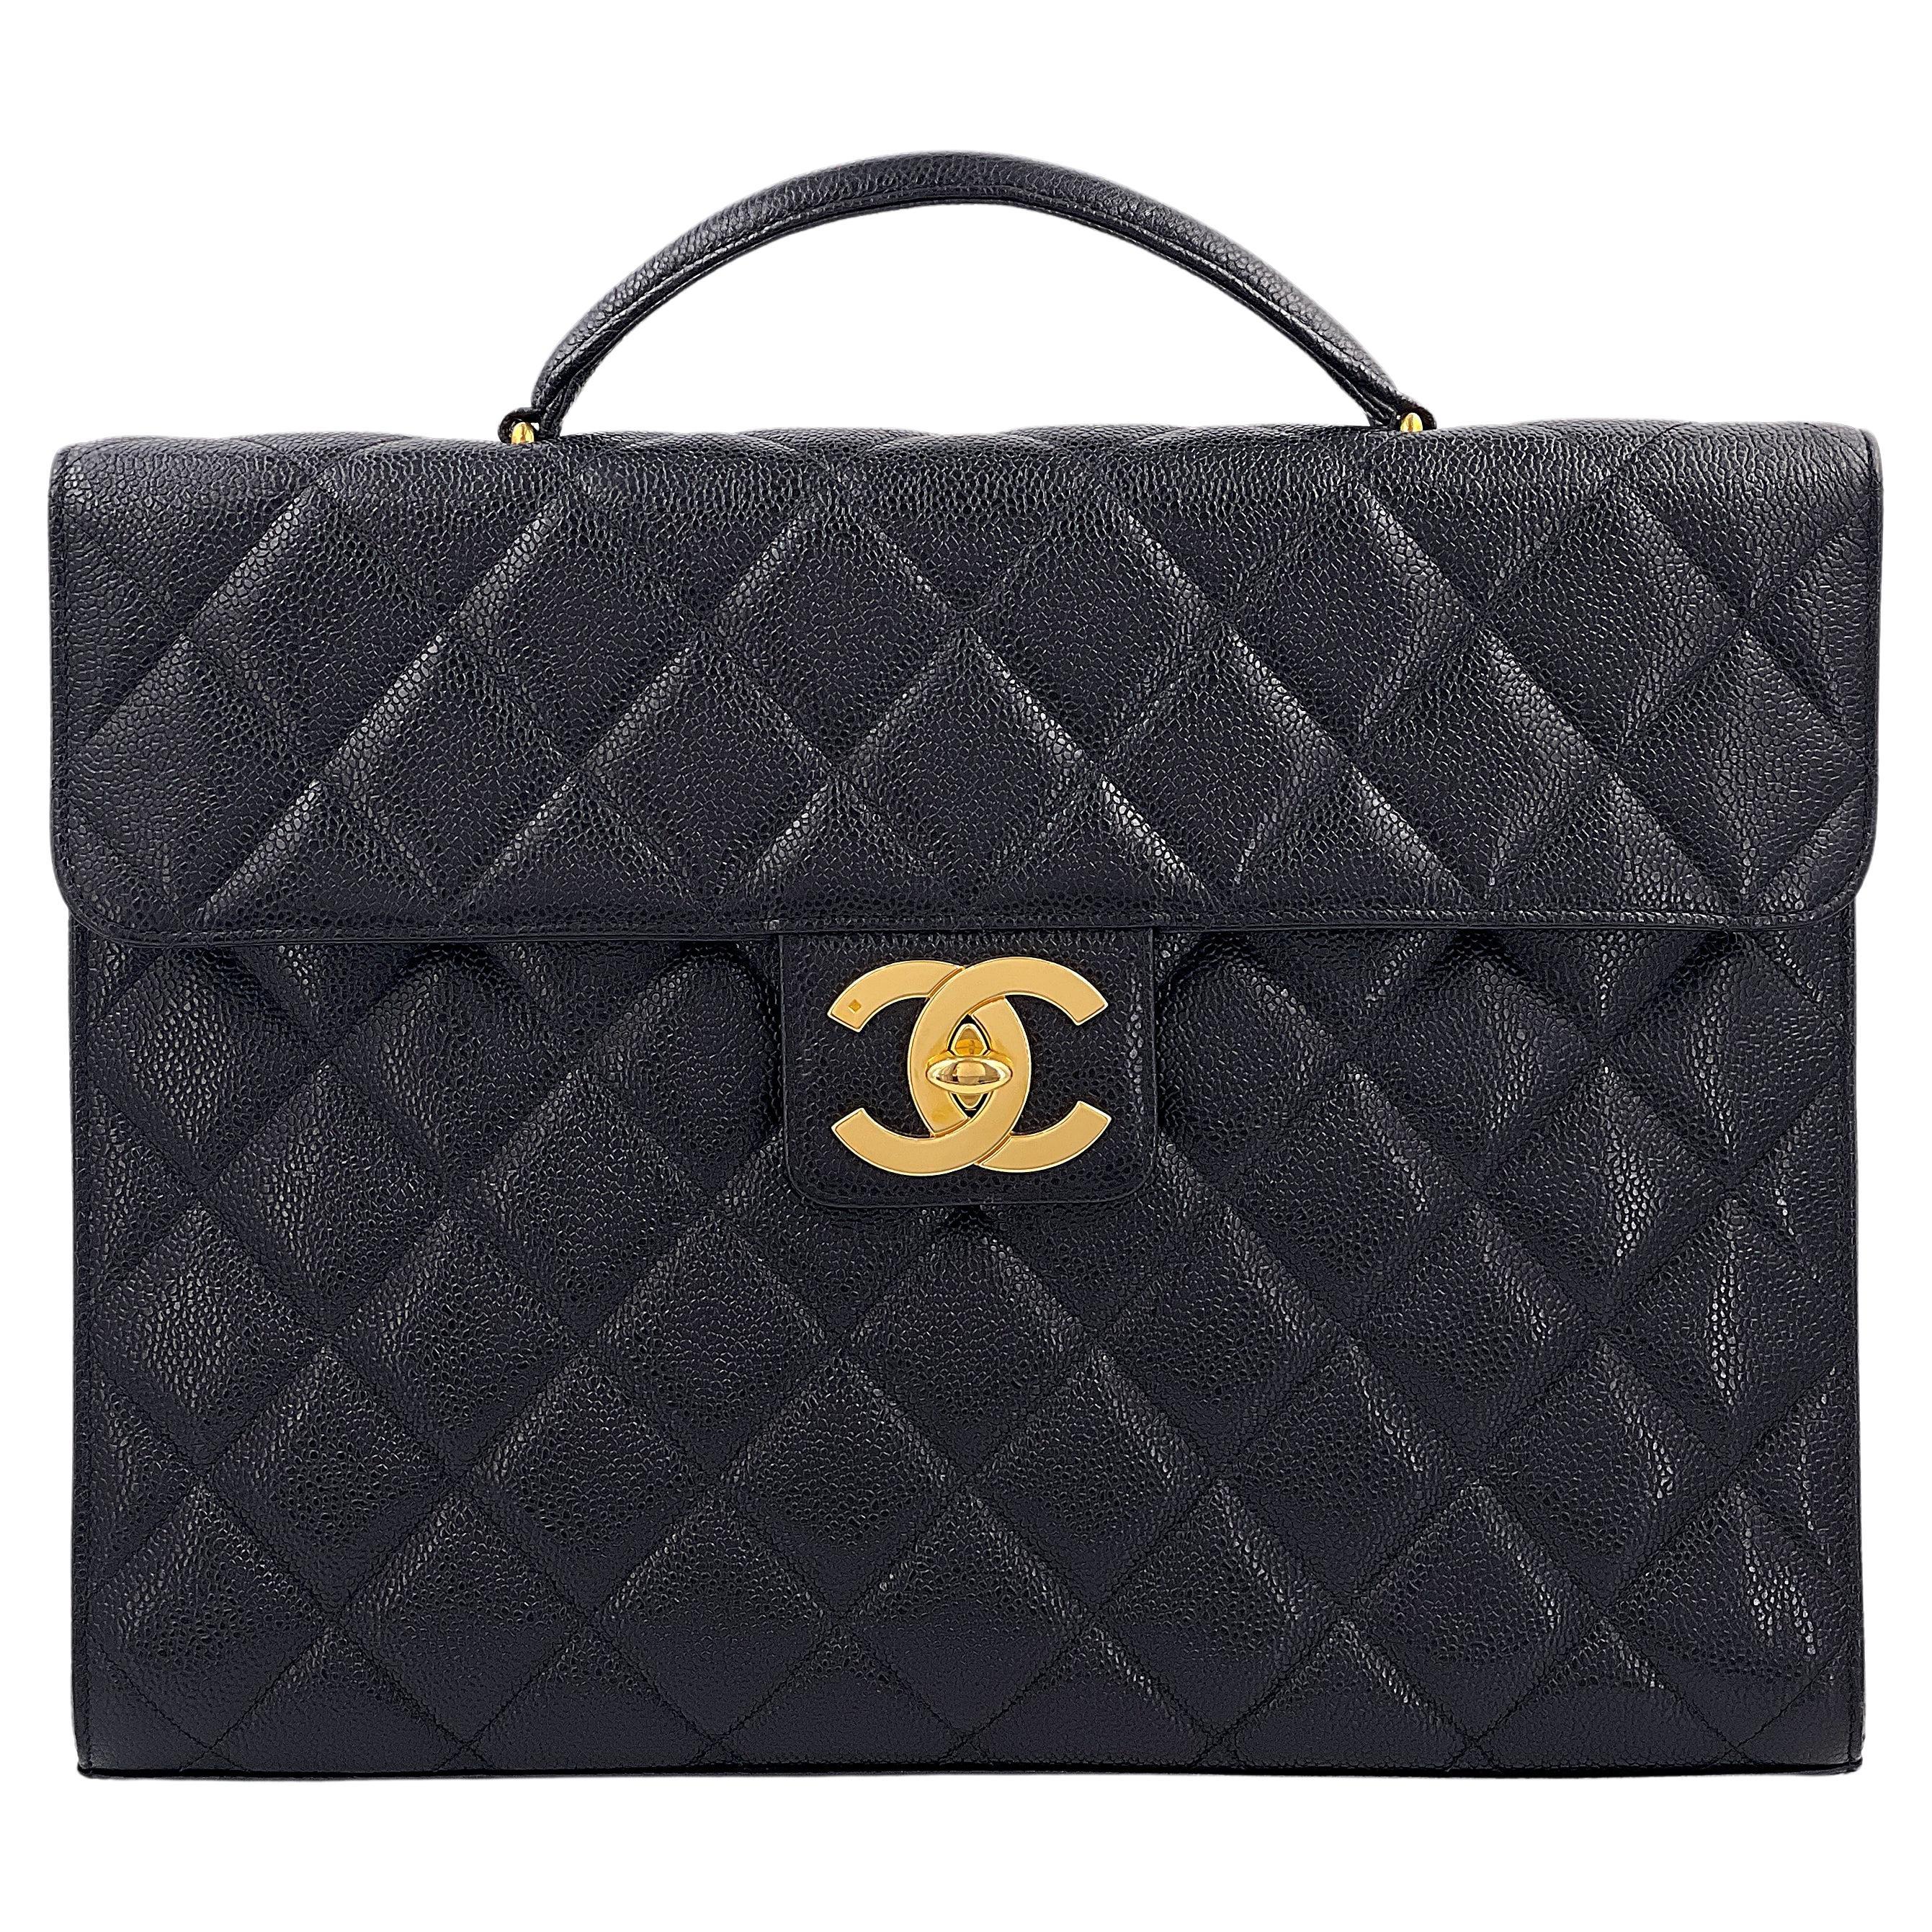 What makes a Chanel bag rare?